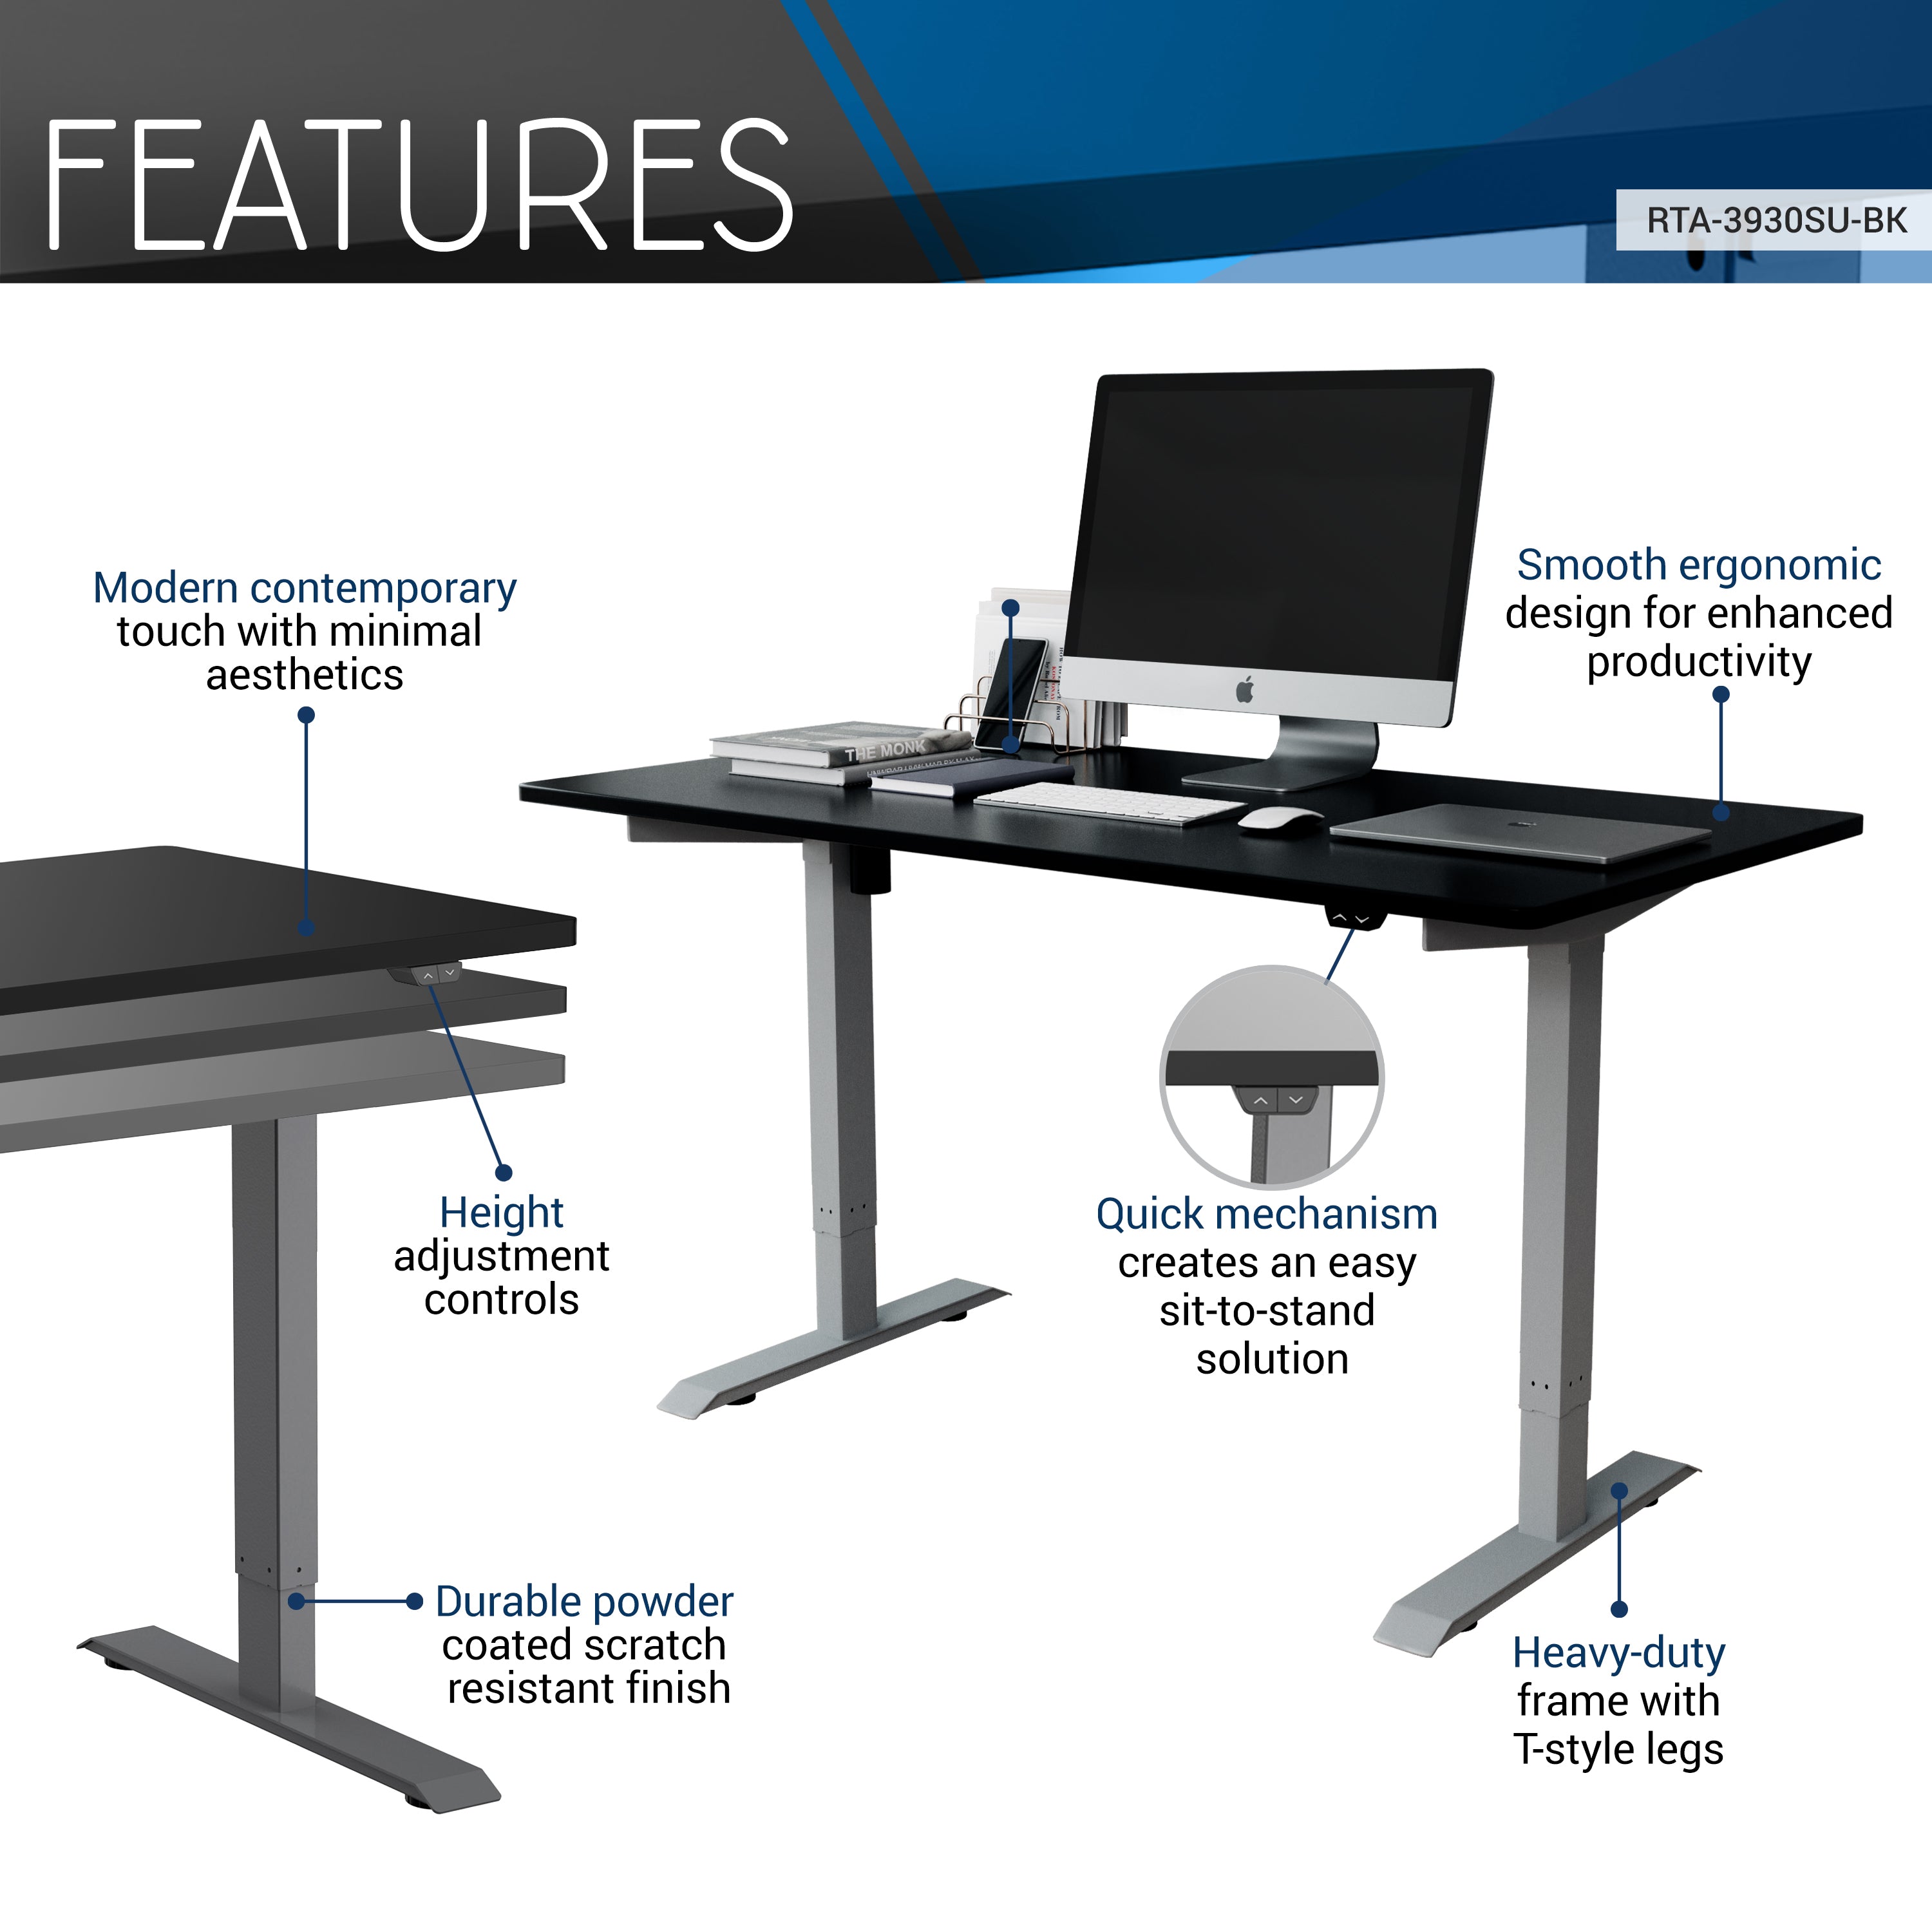 Adjustable Sit to Stand Desk - Techni Mobili